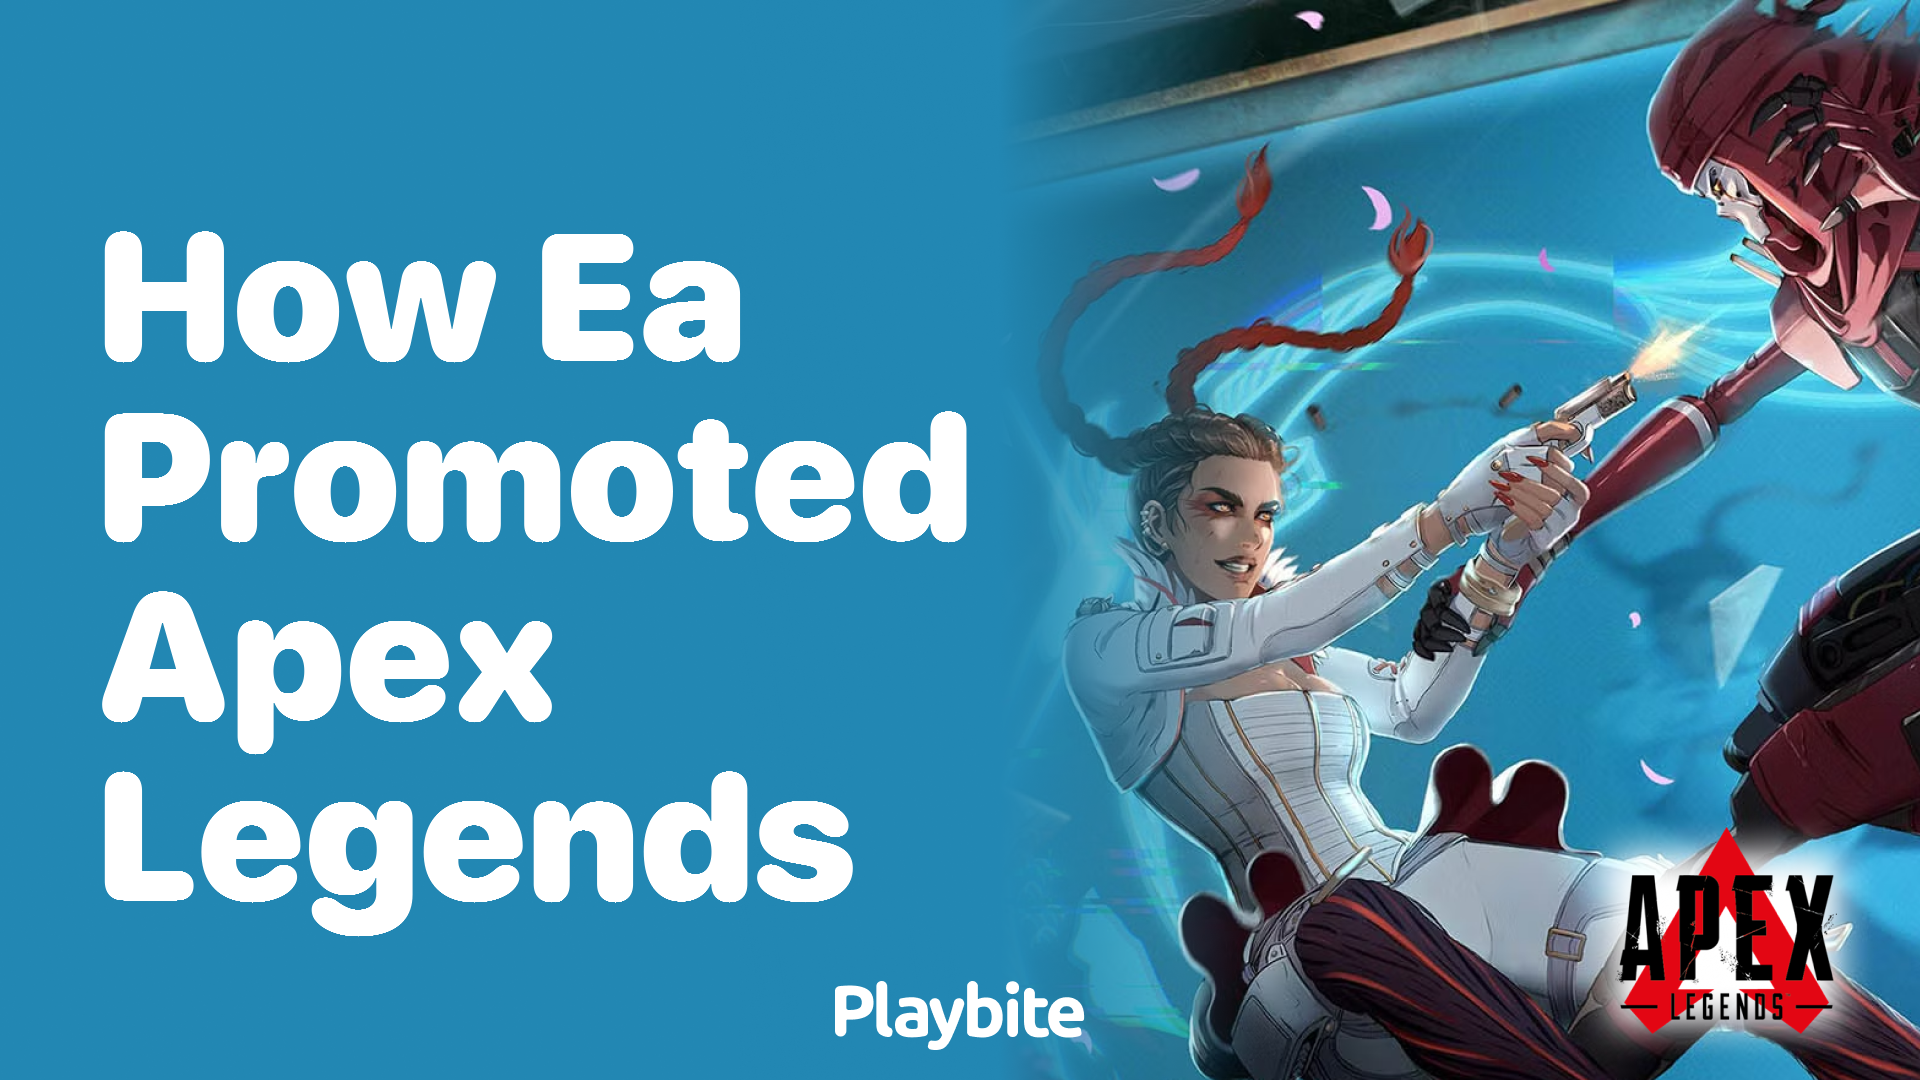 How did EA promote Apex Legends?